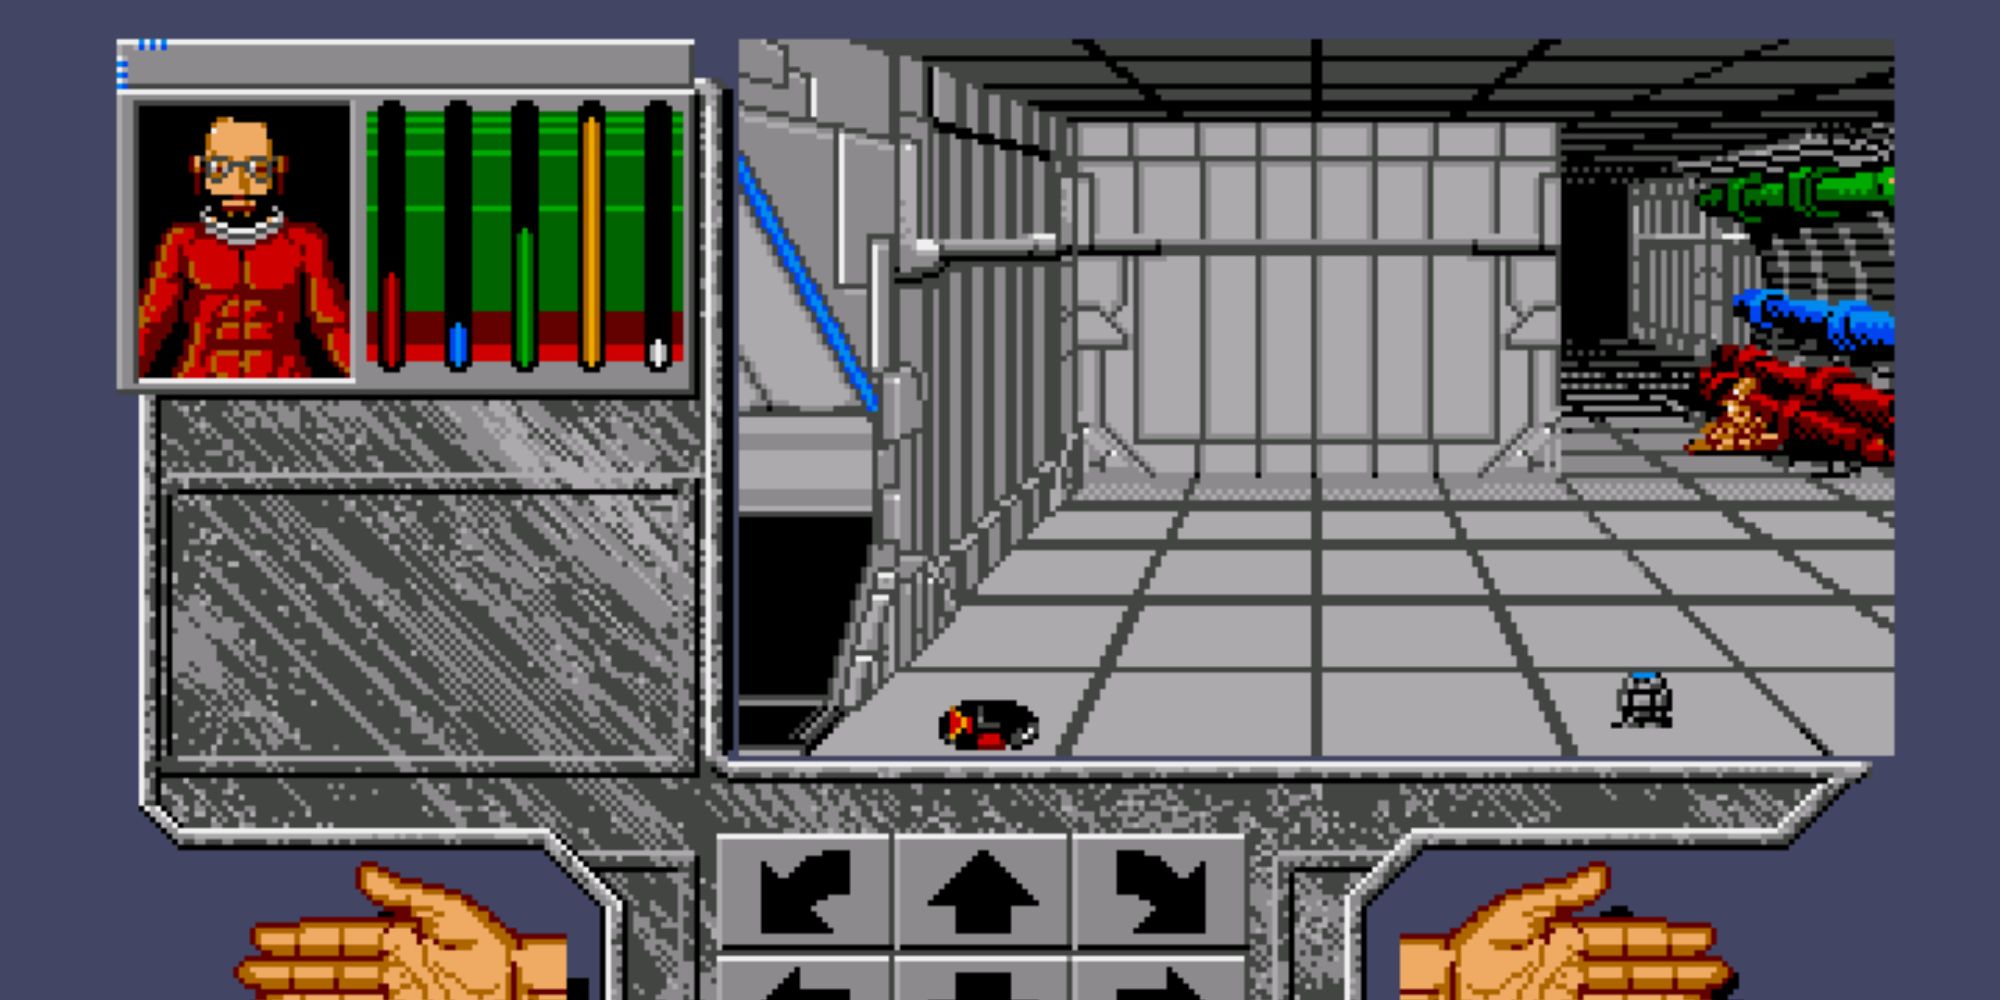 A player navigating a facility in Xenomorph